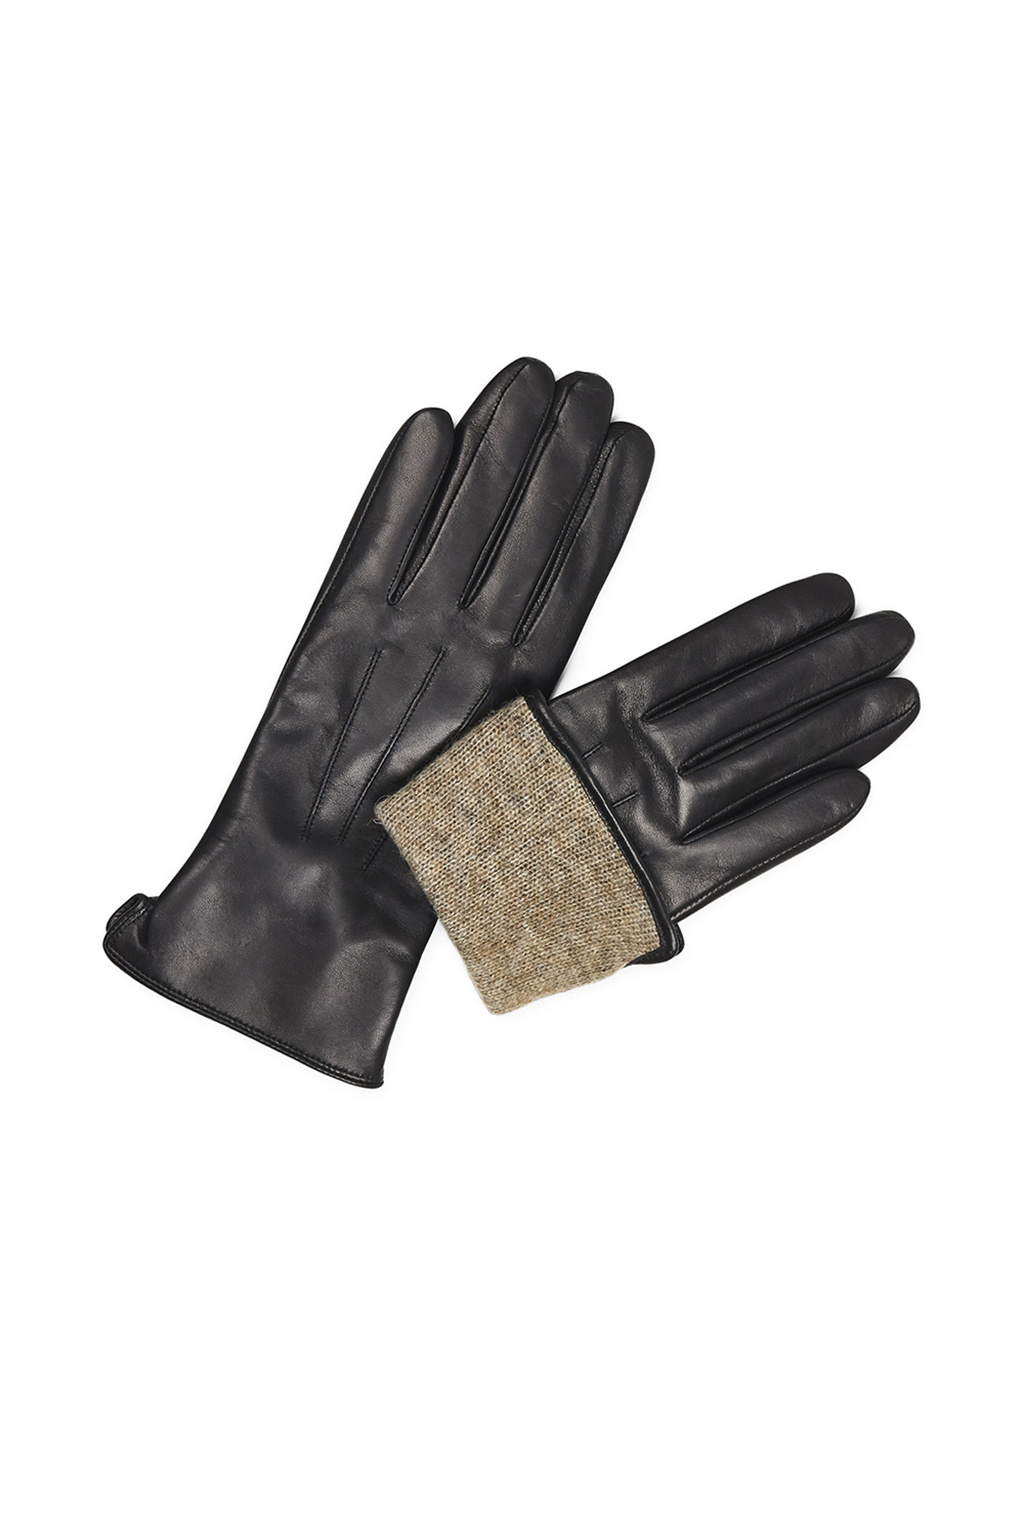 Carianna Glove - Black-2